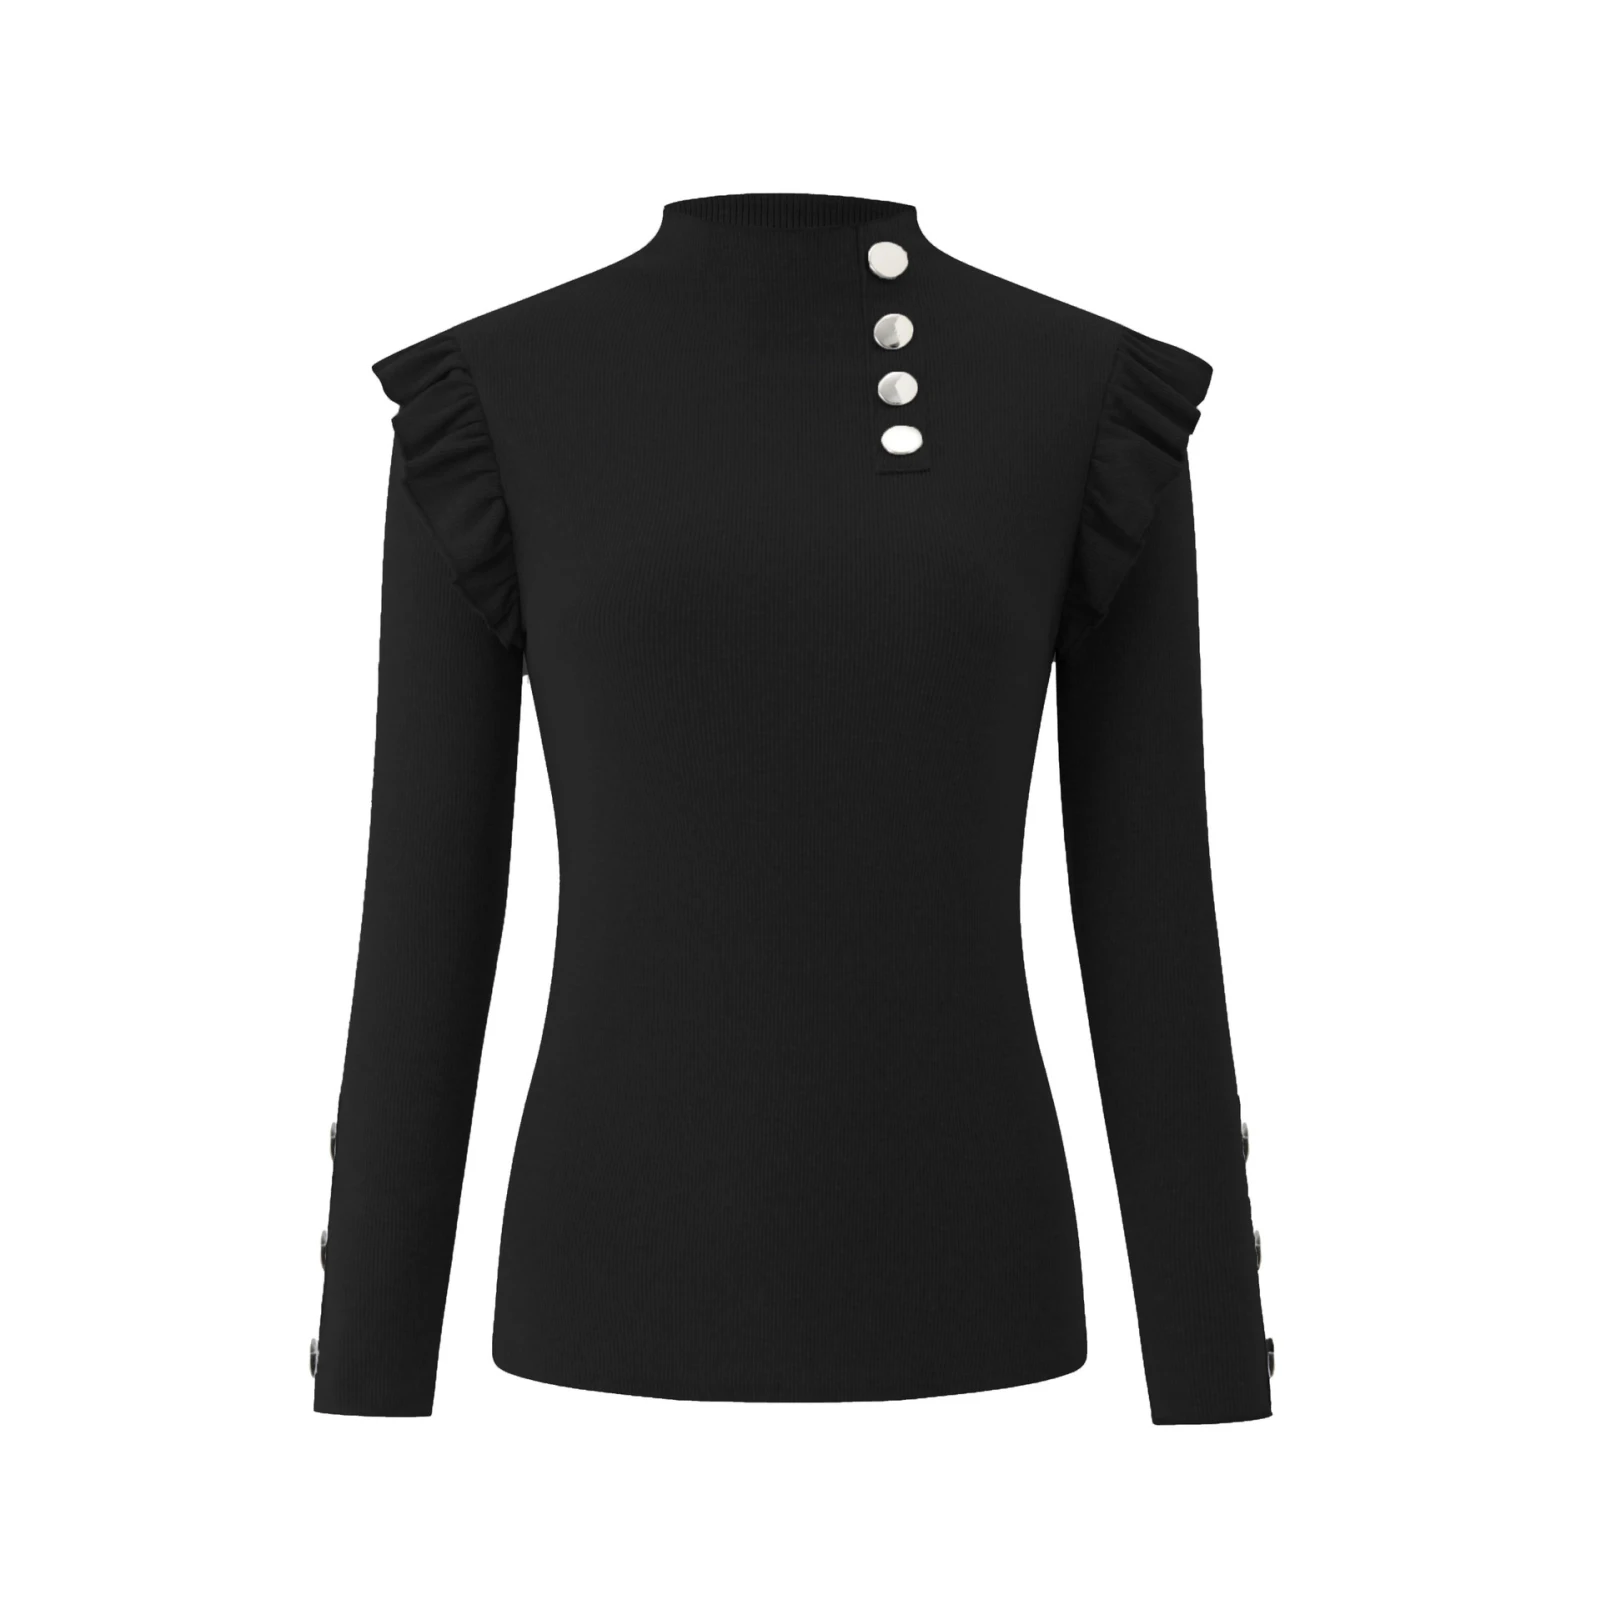 cardigan 2022 Autumn/winter New Women's Shirt Jacket Coat Long Sleeve Knitwear Ribbed Frilly Button Shirt Basic Shirt sweater for women Sweaters